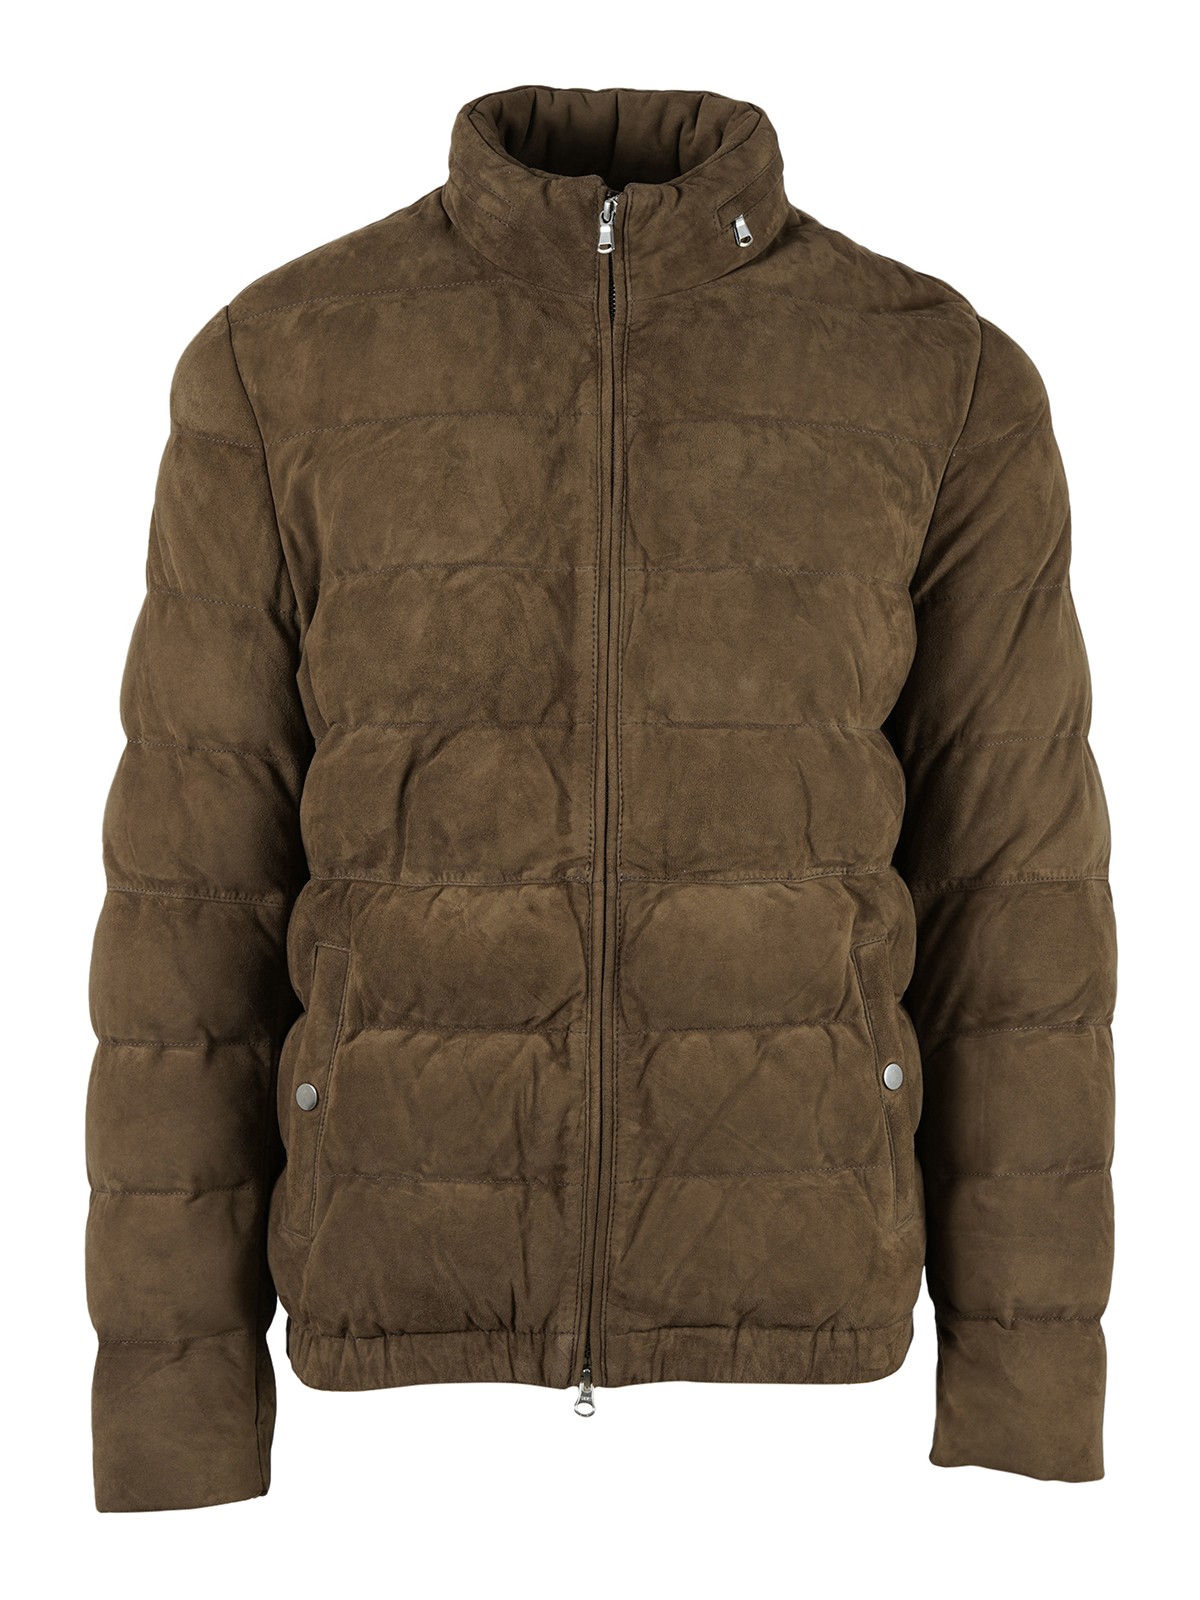 Leather jacket Andrea D'Amico - Man leather jacket - DGU0414462